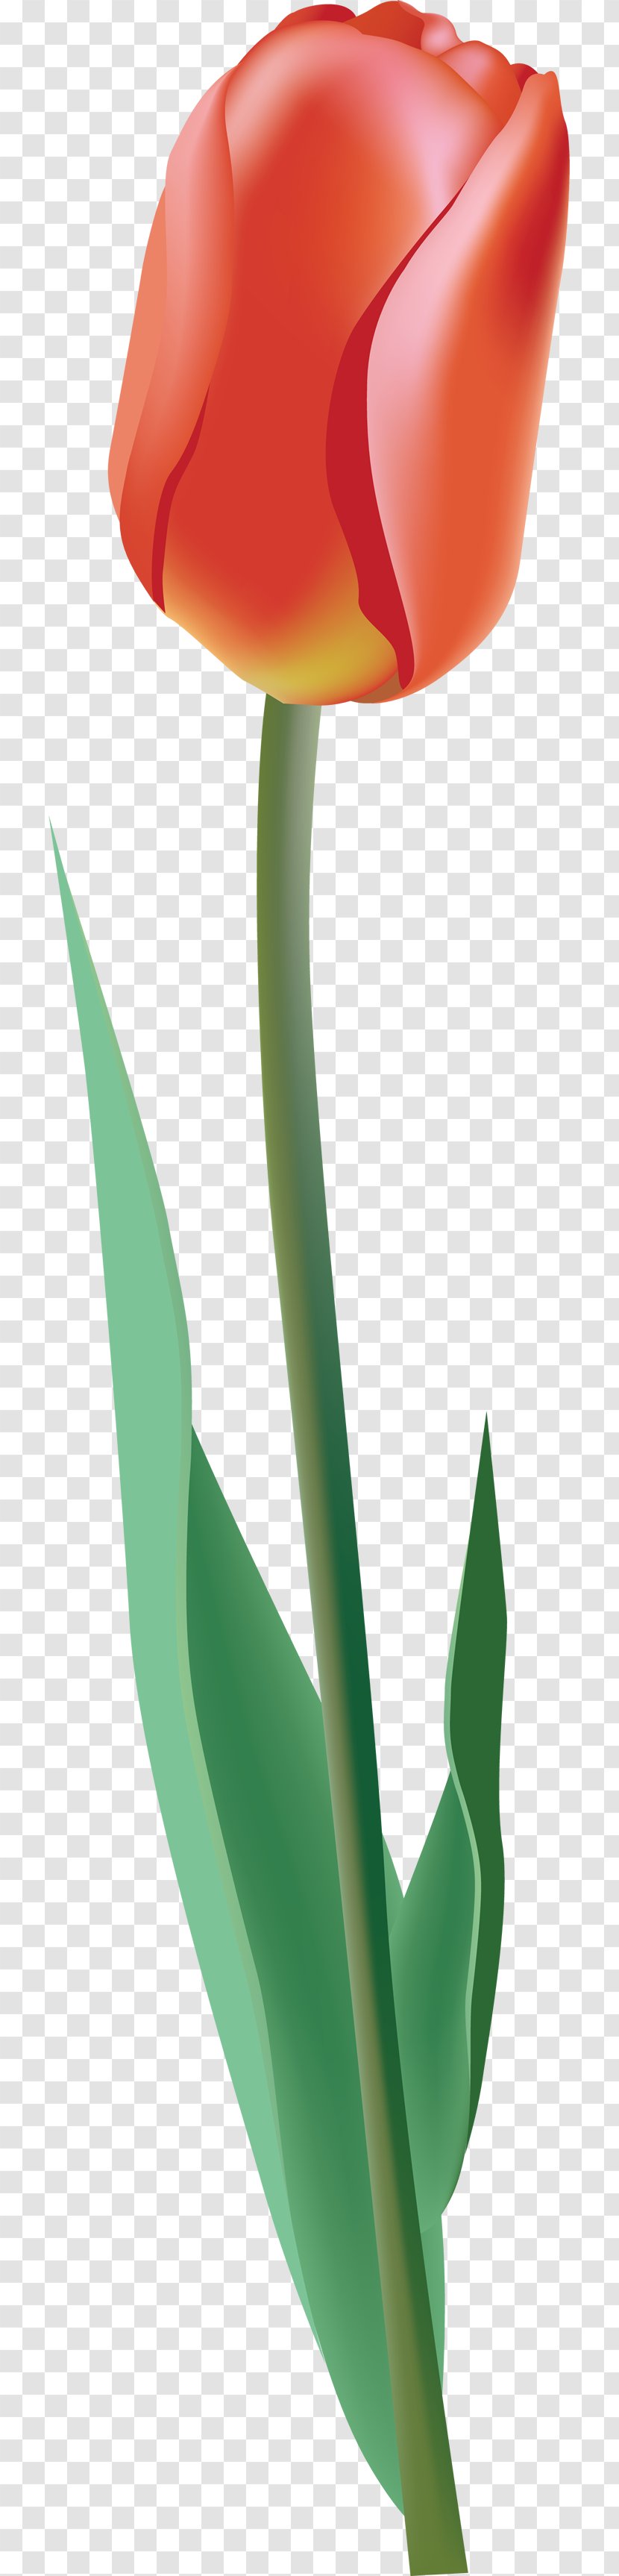 Tulip Flower - Plant - Image Transparent PNG